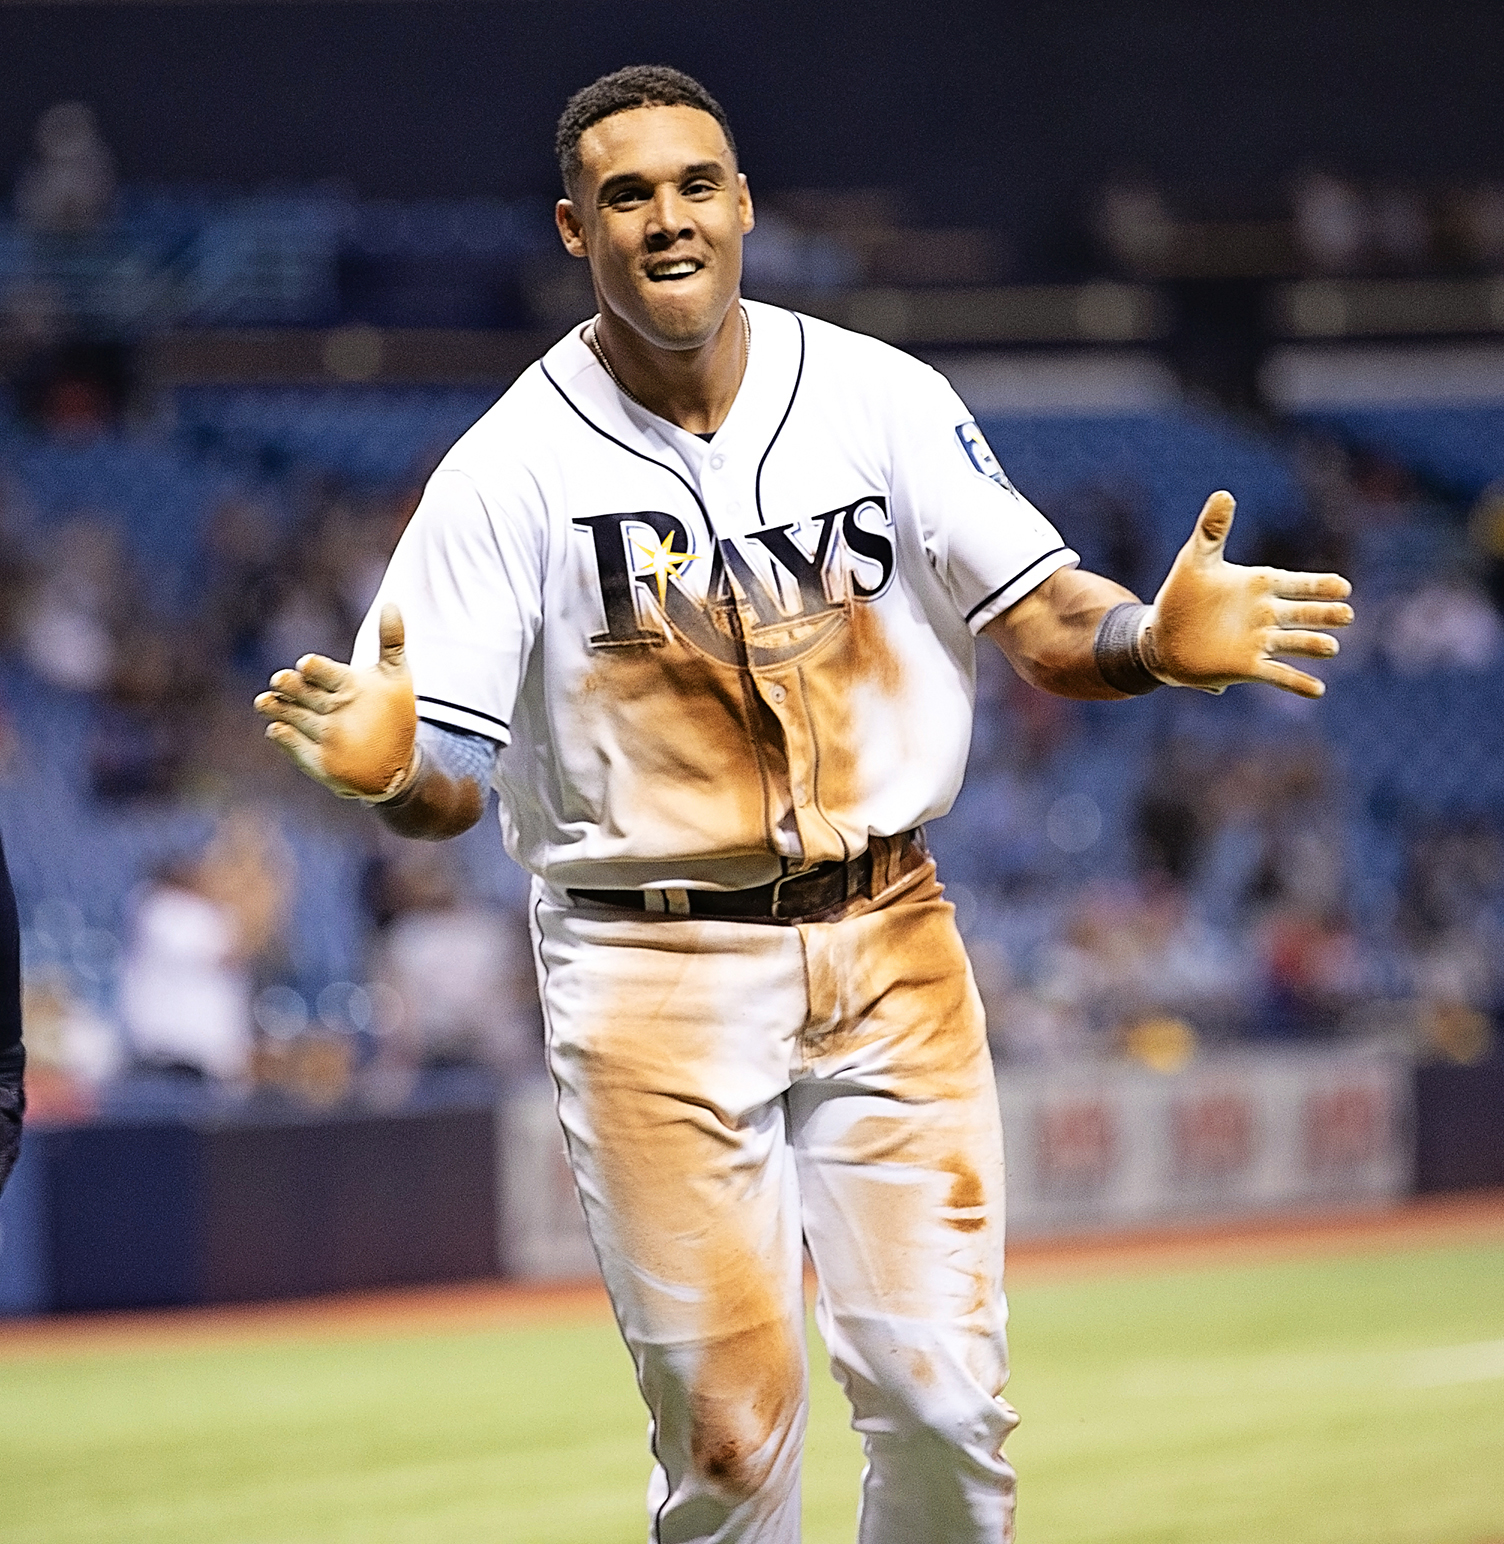 Gomez hit his fourth home run for Rays./CARMEN MANDATO